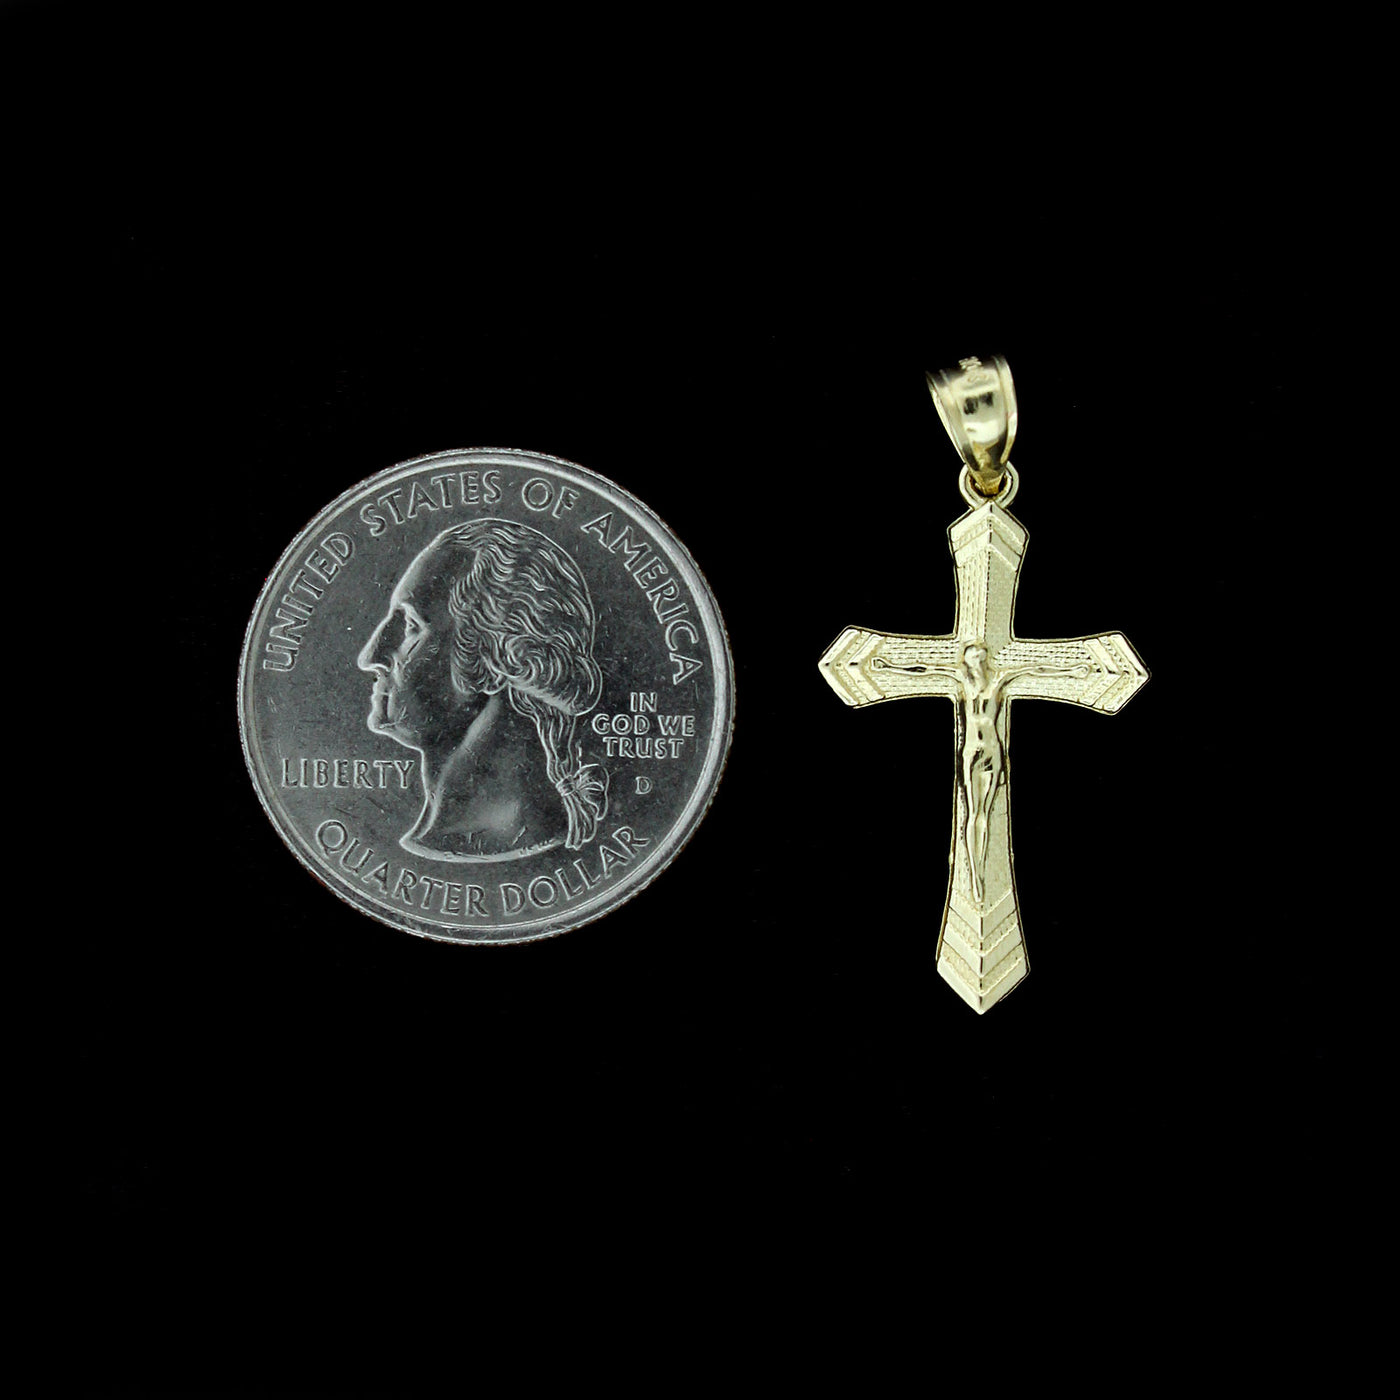 Real 10K Solid Yellow Gold Cross Pendant Diamond Cut Gold Jesus Crucifix Charm